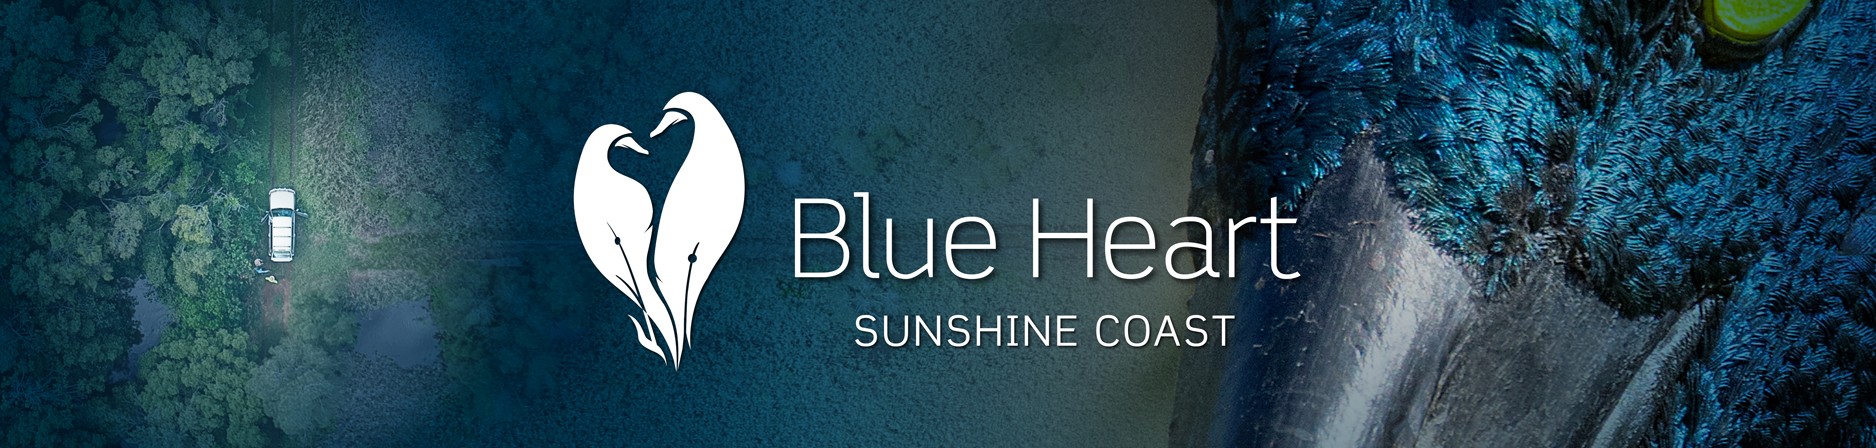 Blue Heart Sunshine Coast